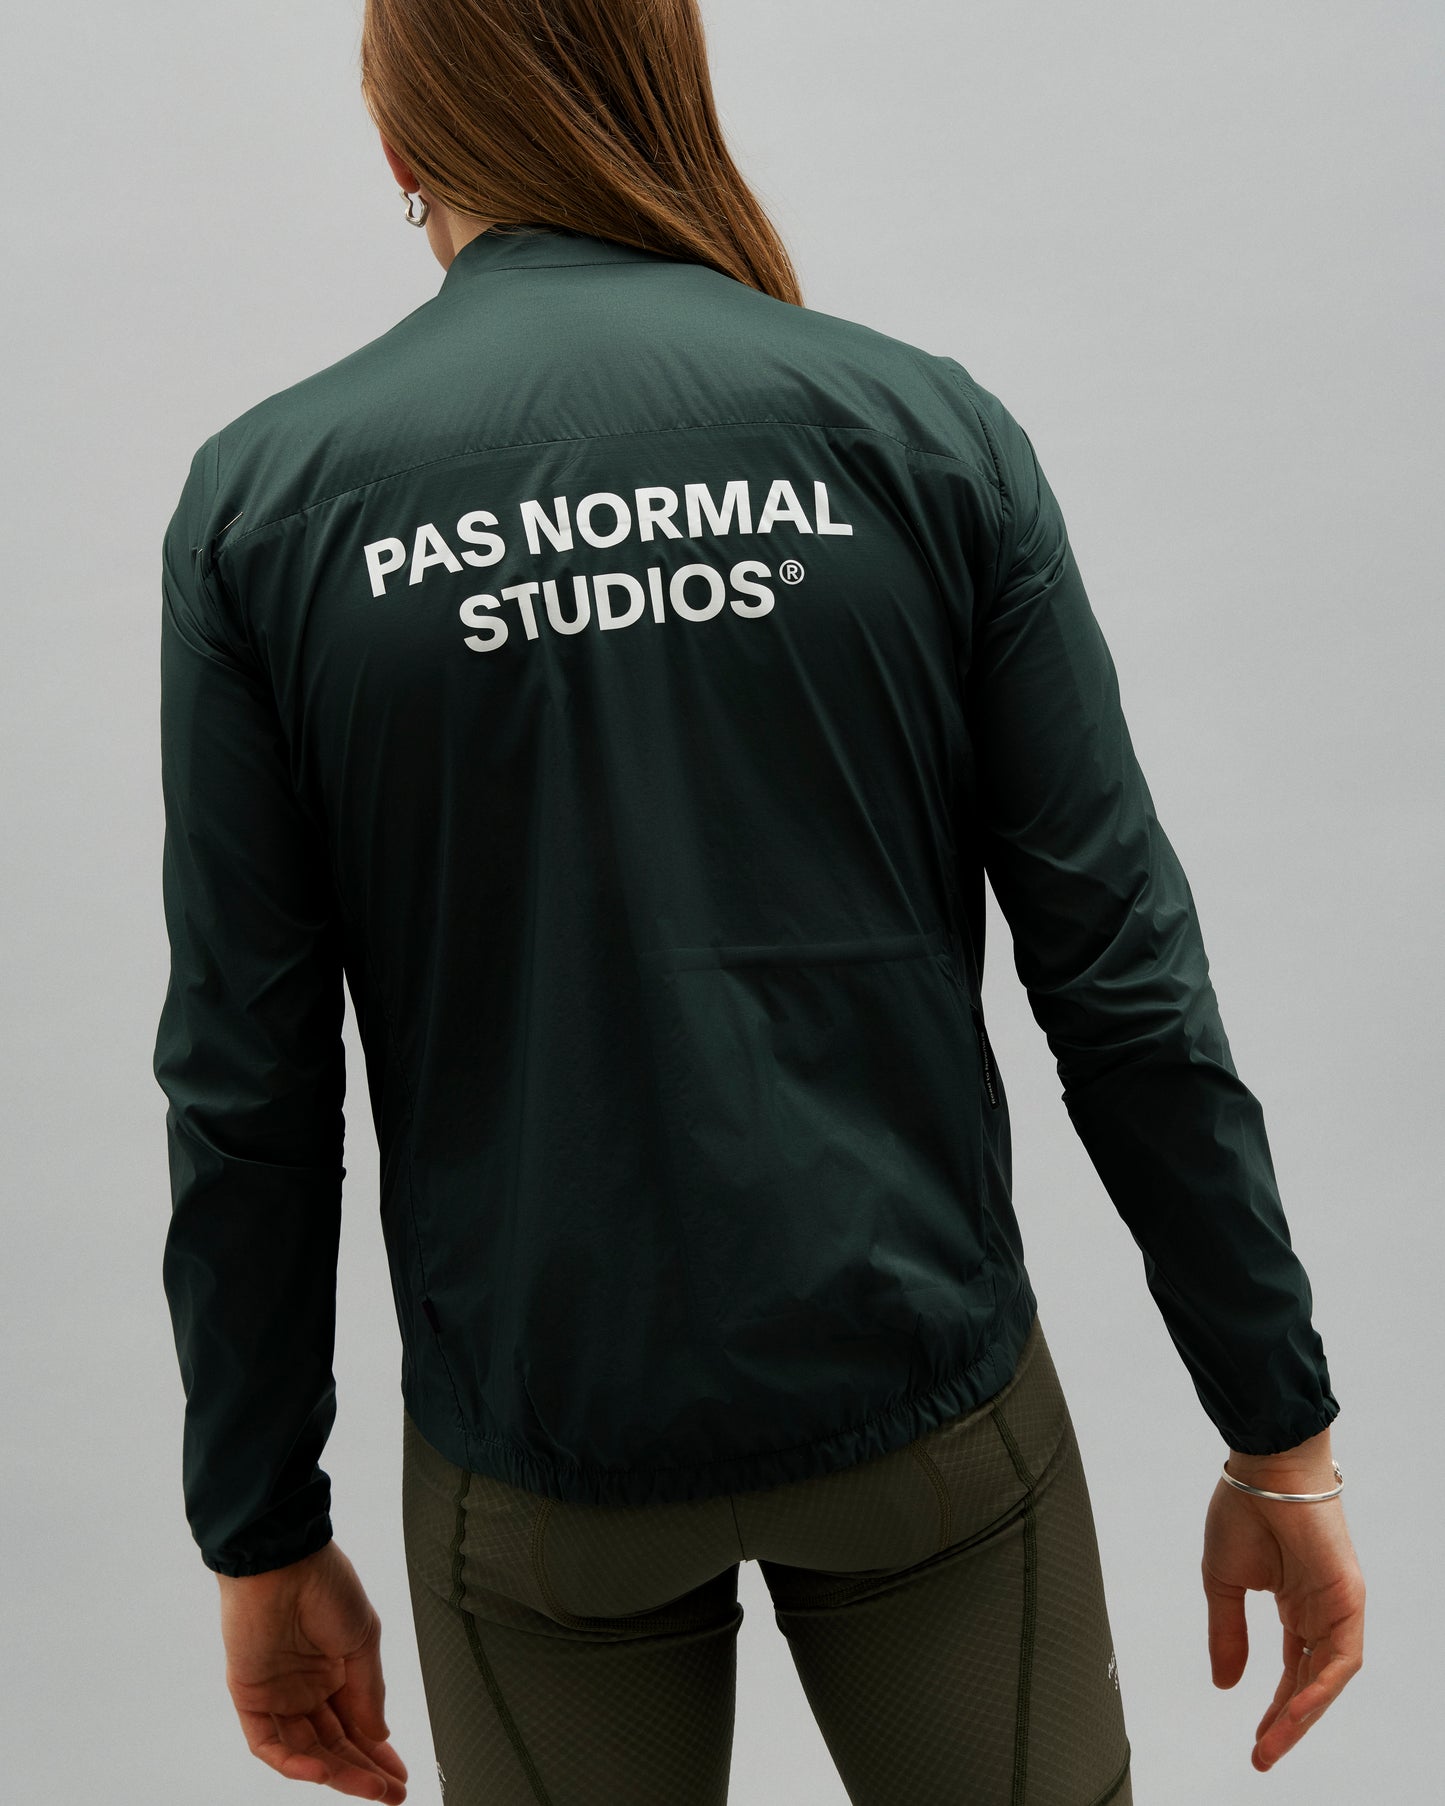 PAS NORMAL STUDIOS Essential Insulated Jacket Petroleum